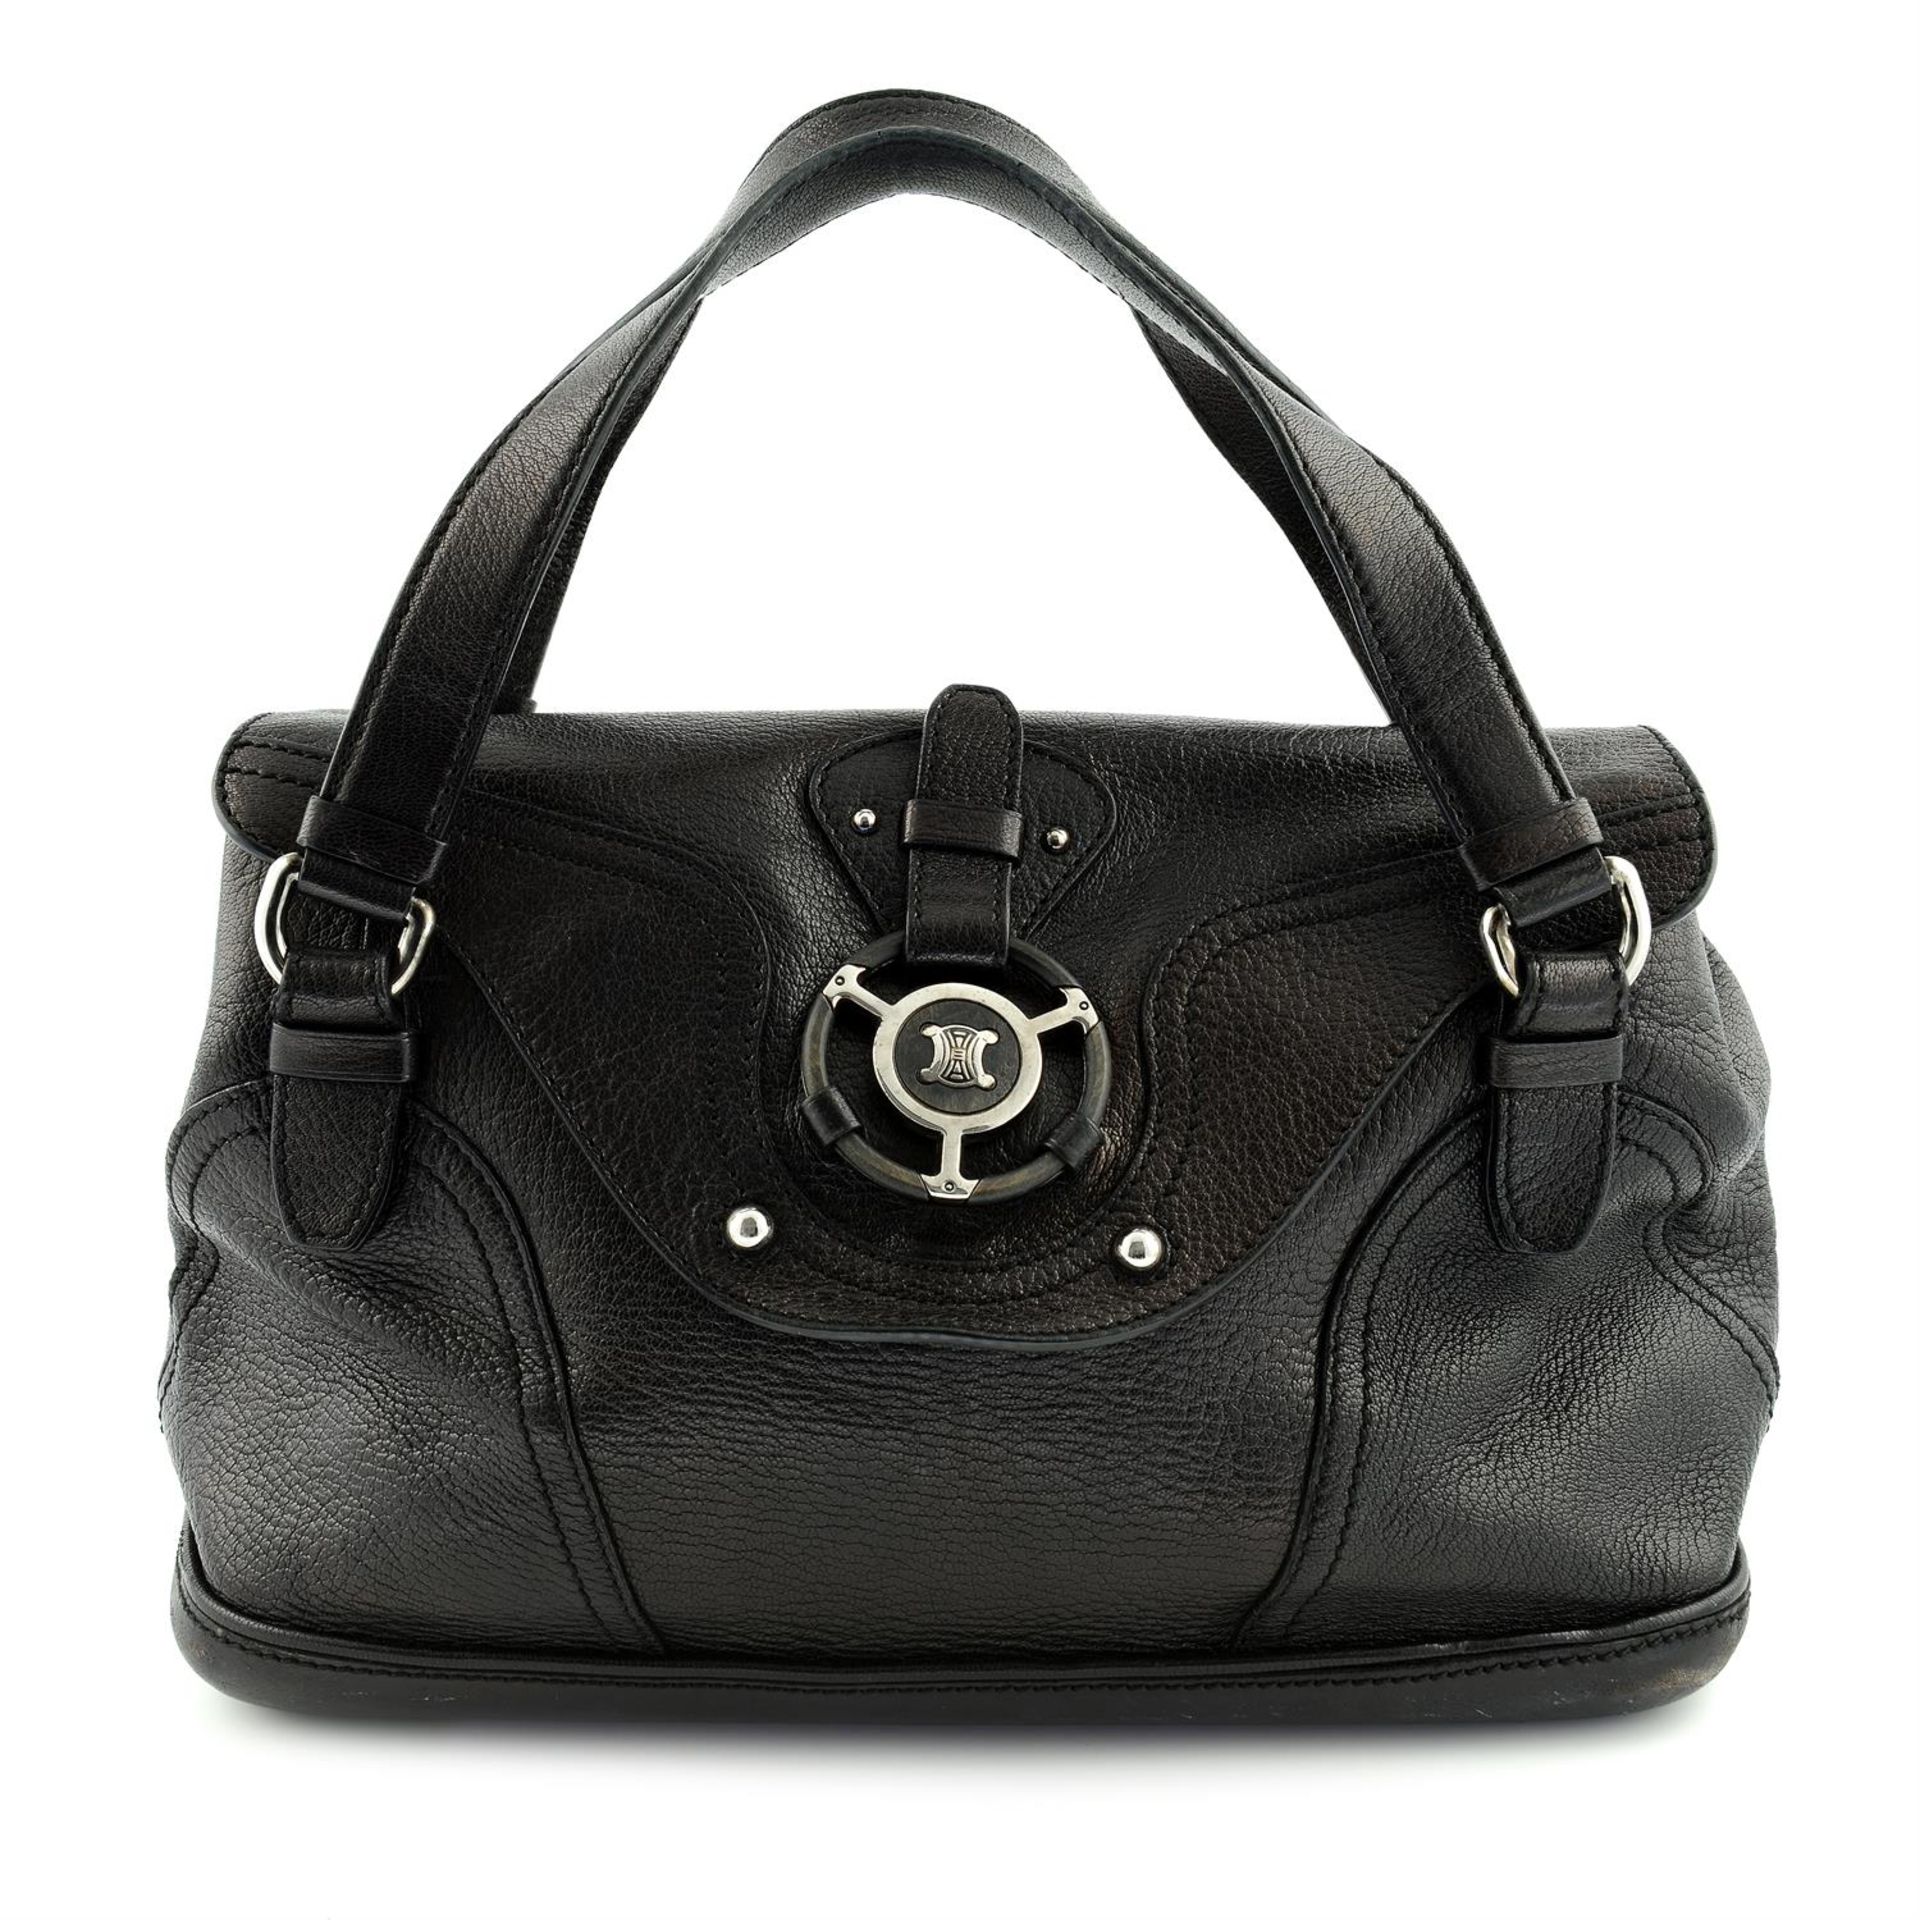 CÉLINE - a black leather handbag.